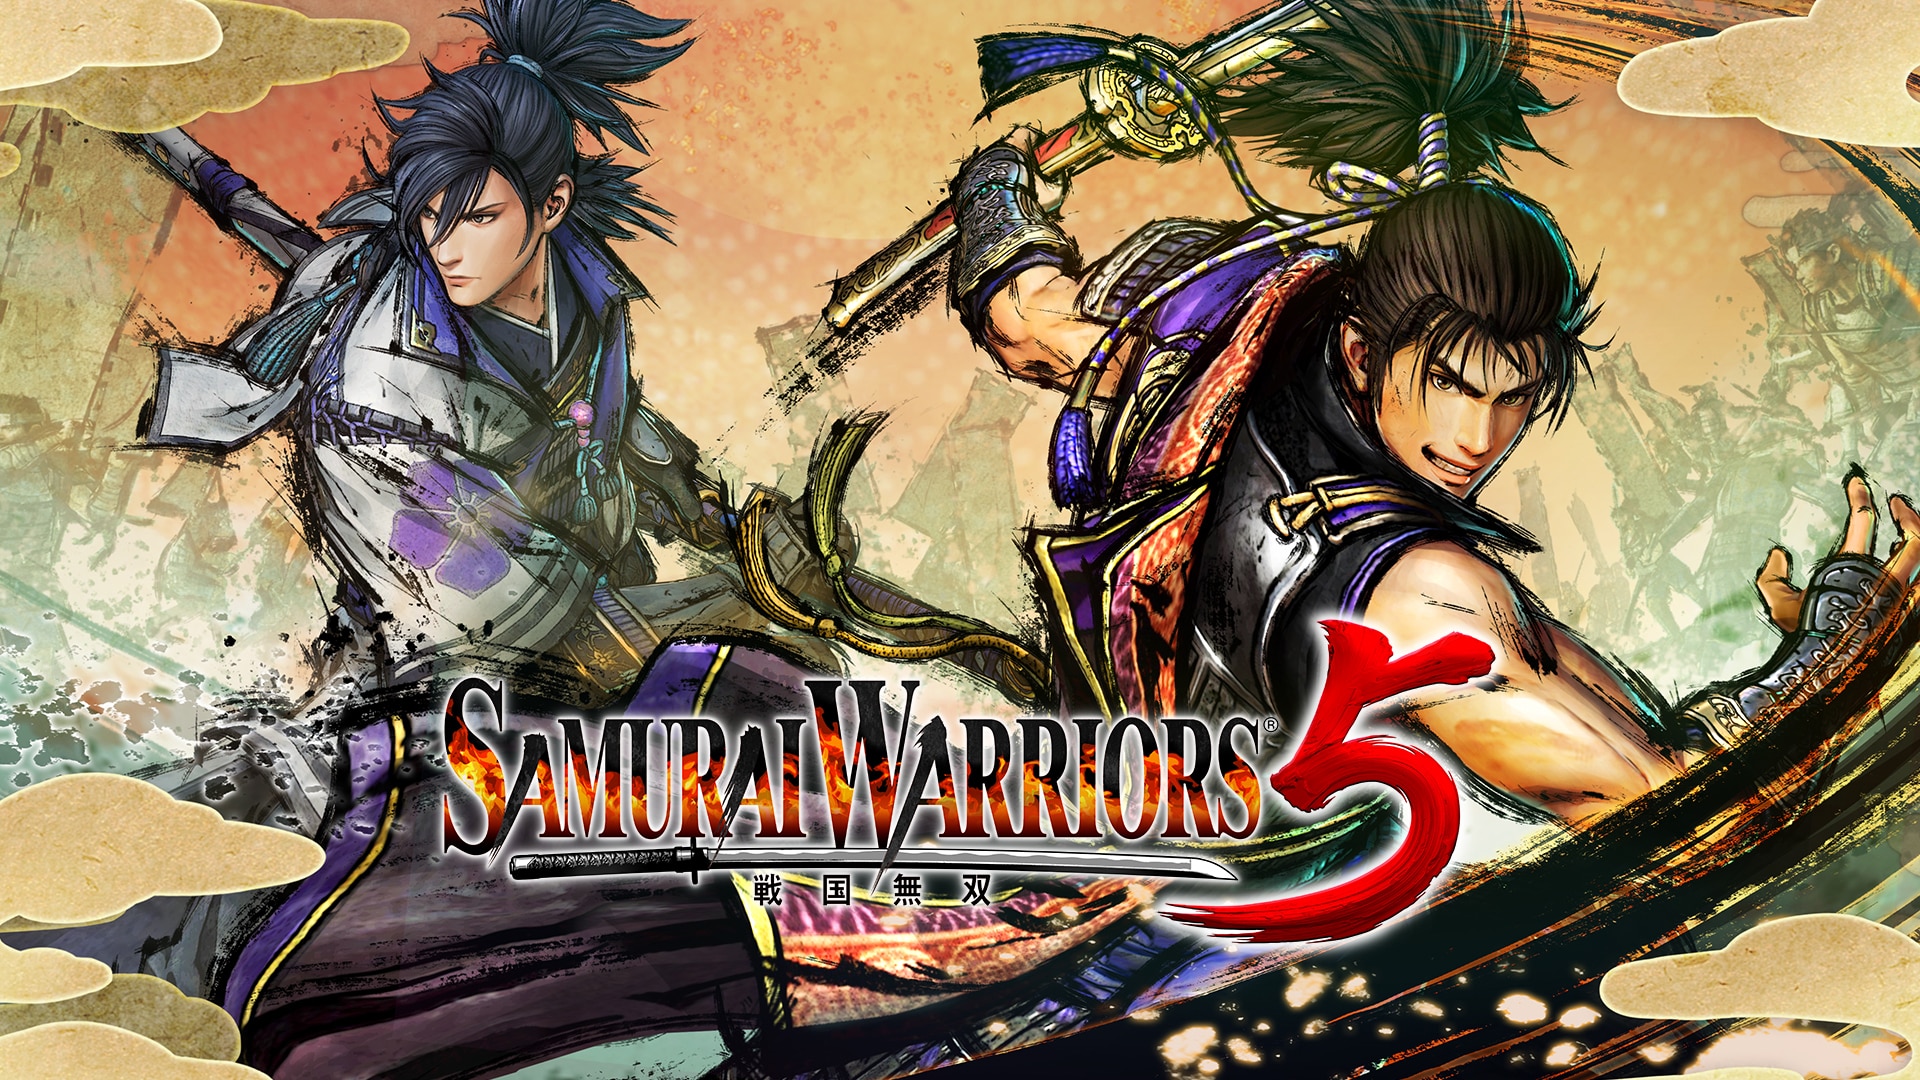 Samurai Warriors 5: dettagli sui protagonisti 2